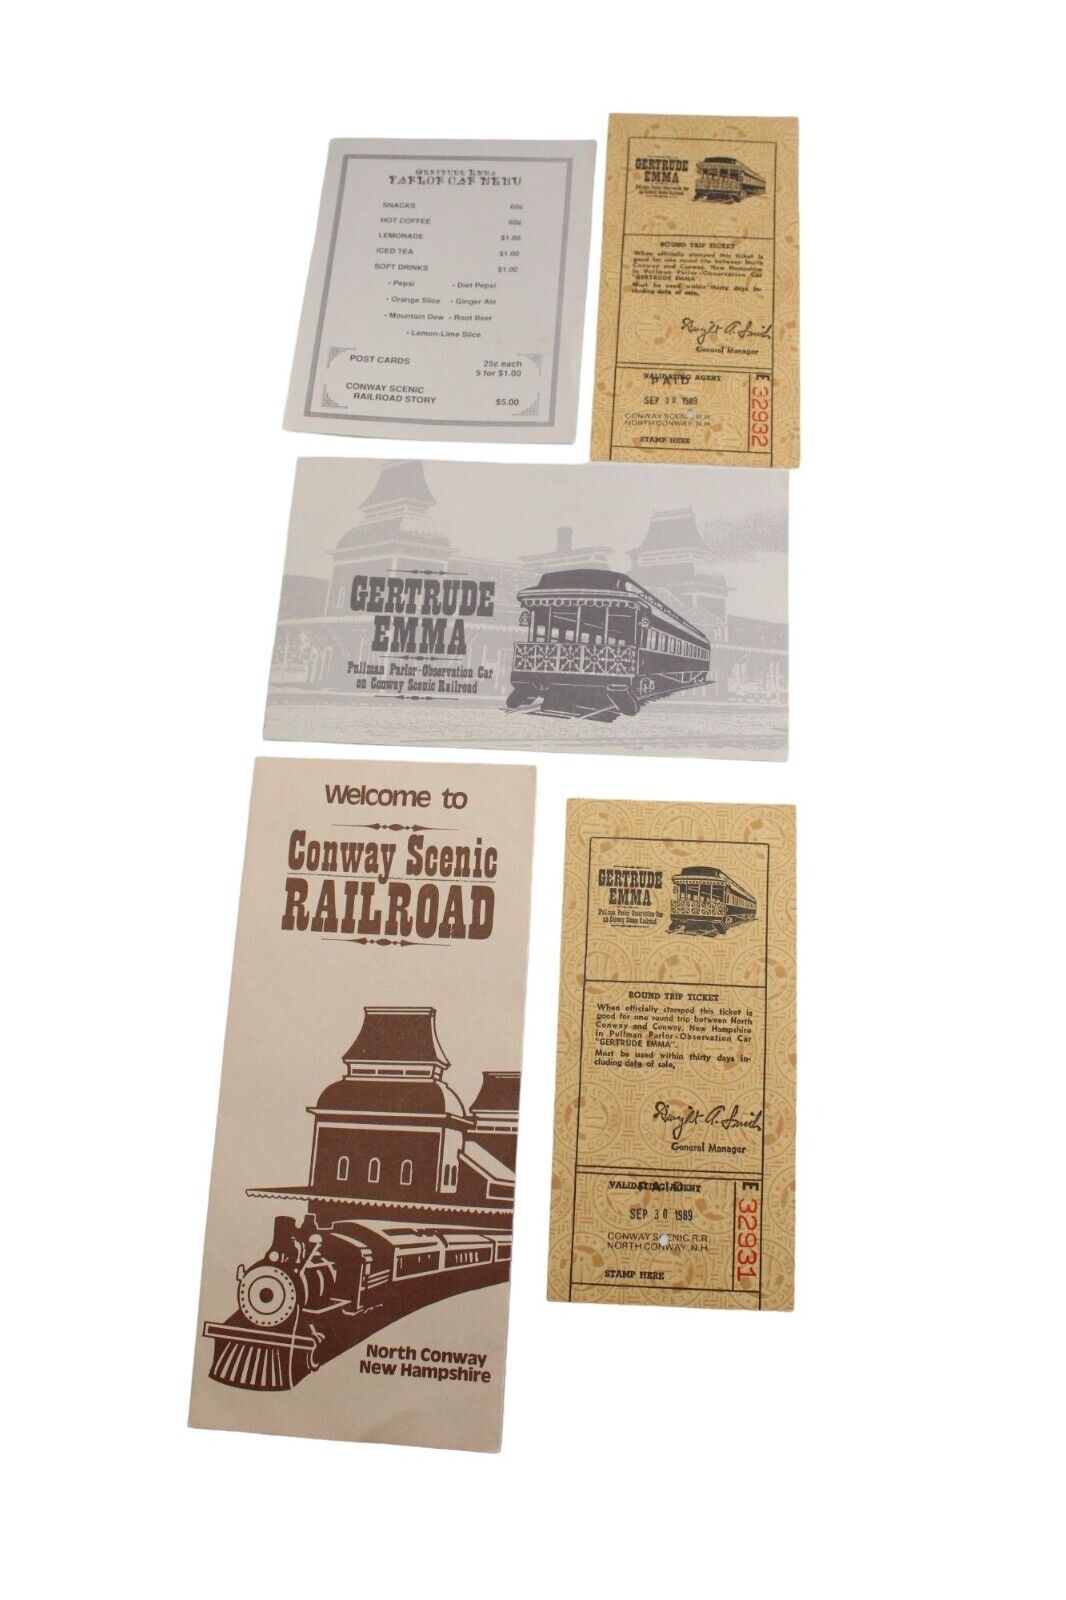 Conway Railroad Brochure Tickets Vintage Gertrude Emma Railcar NH 77380